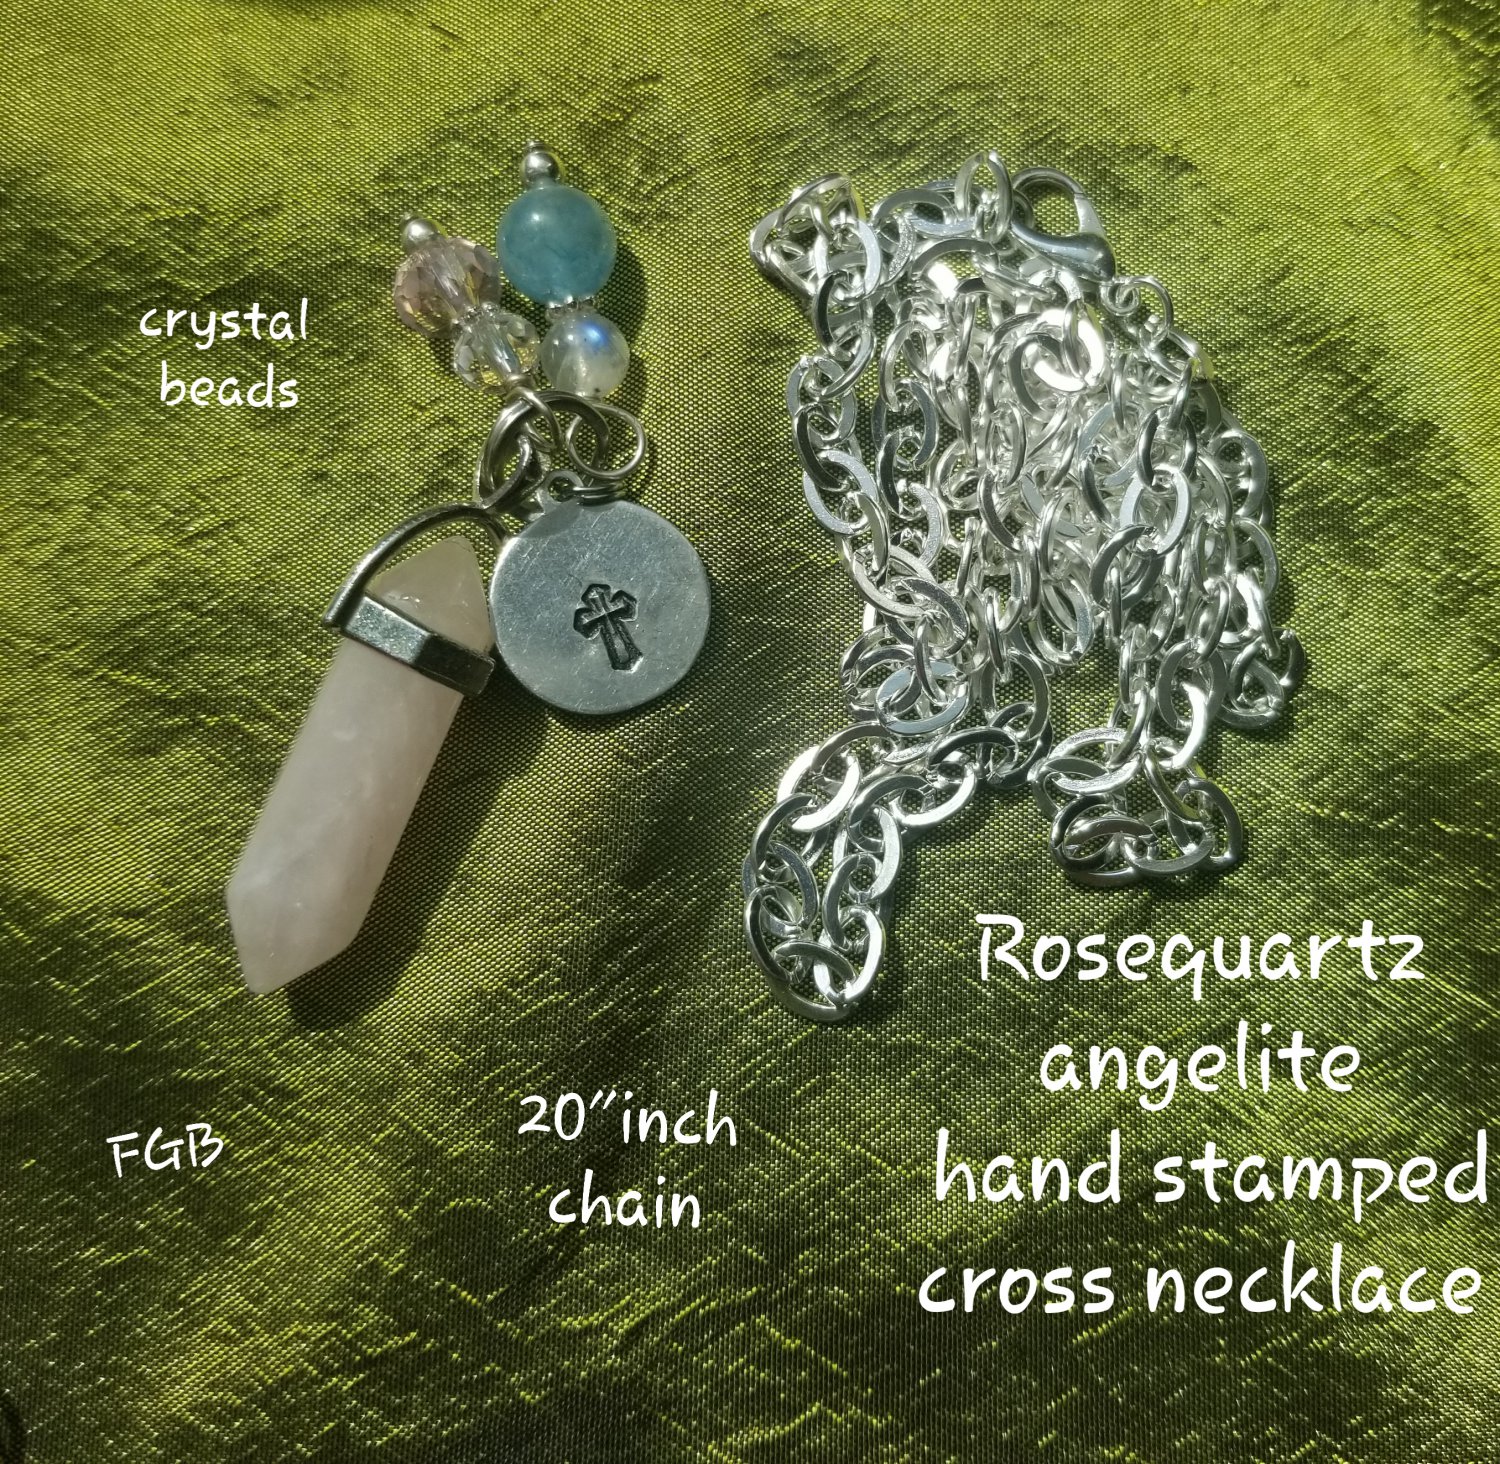 Rosequartz point cross necklace